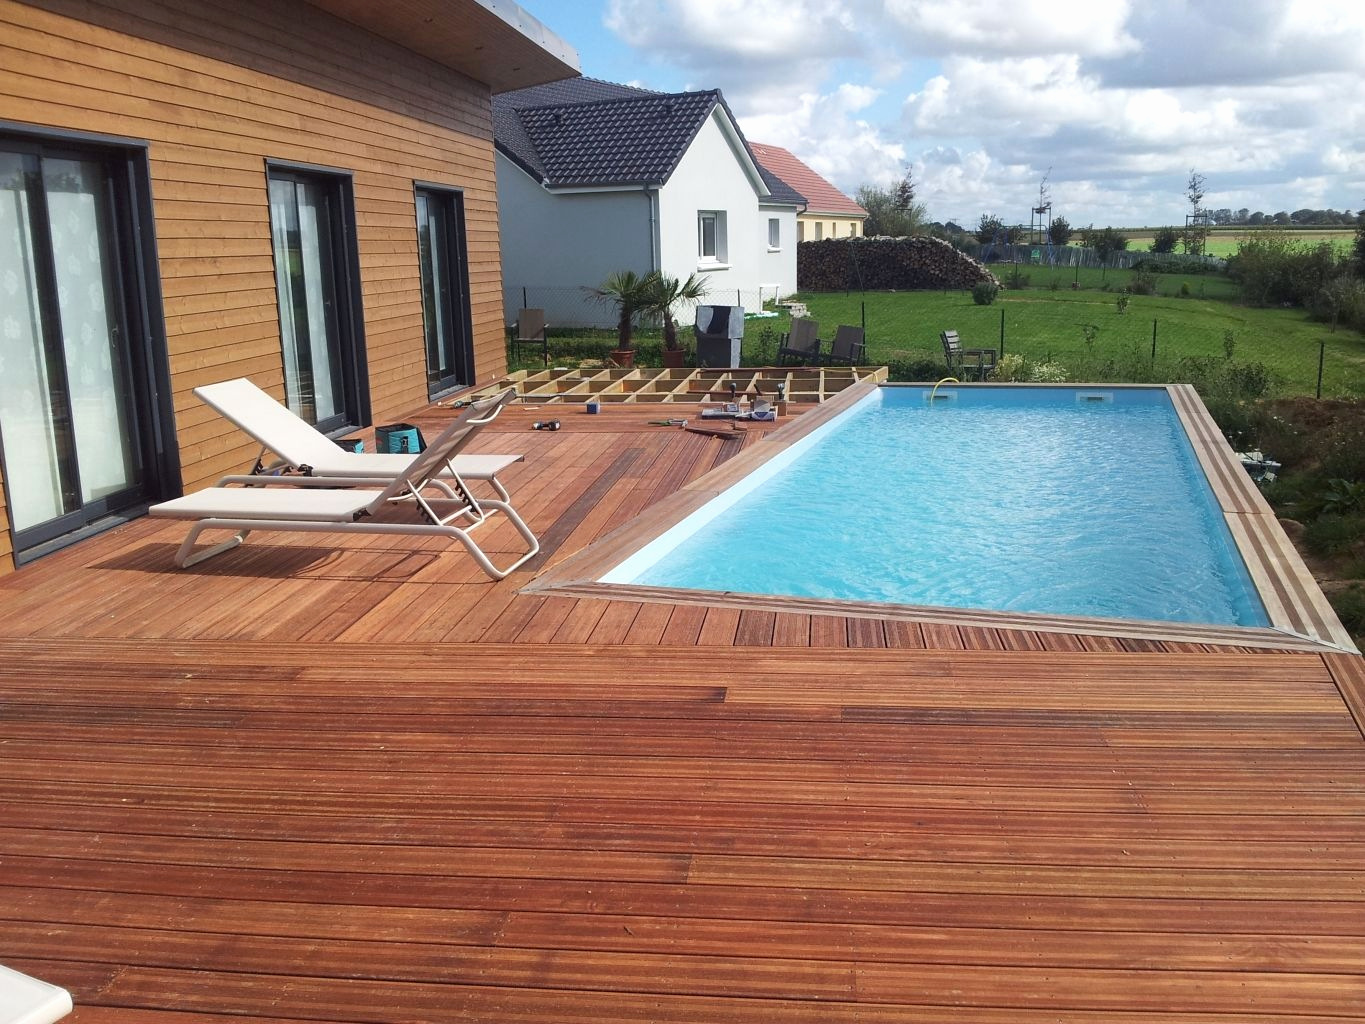 terrasse bois piscine hors sol impressionnant plage piscine bois posite inspirant banc de jardin design of terrasse bois piscine hors sol